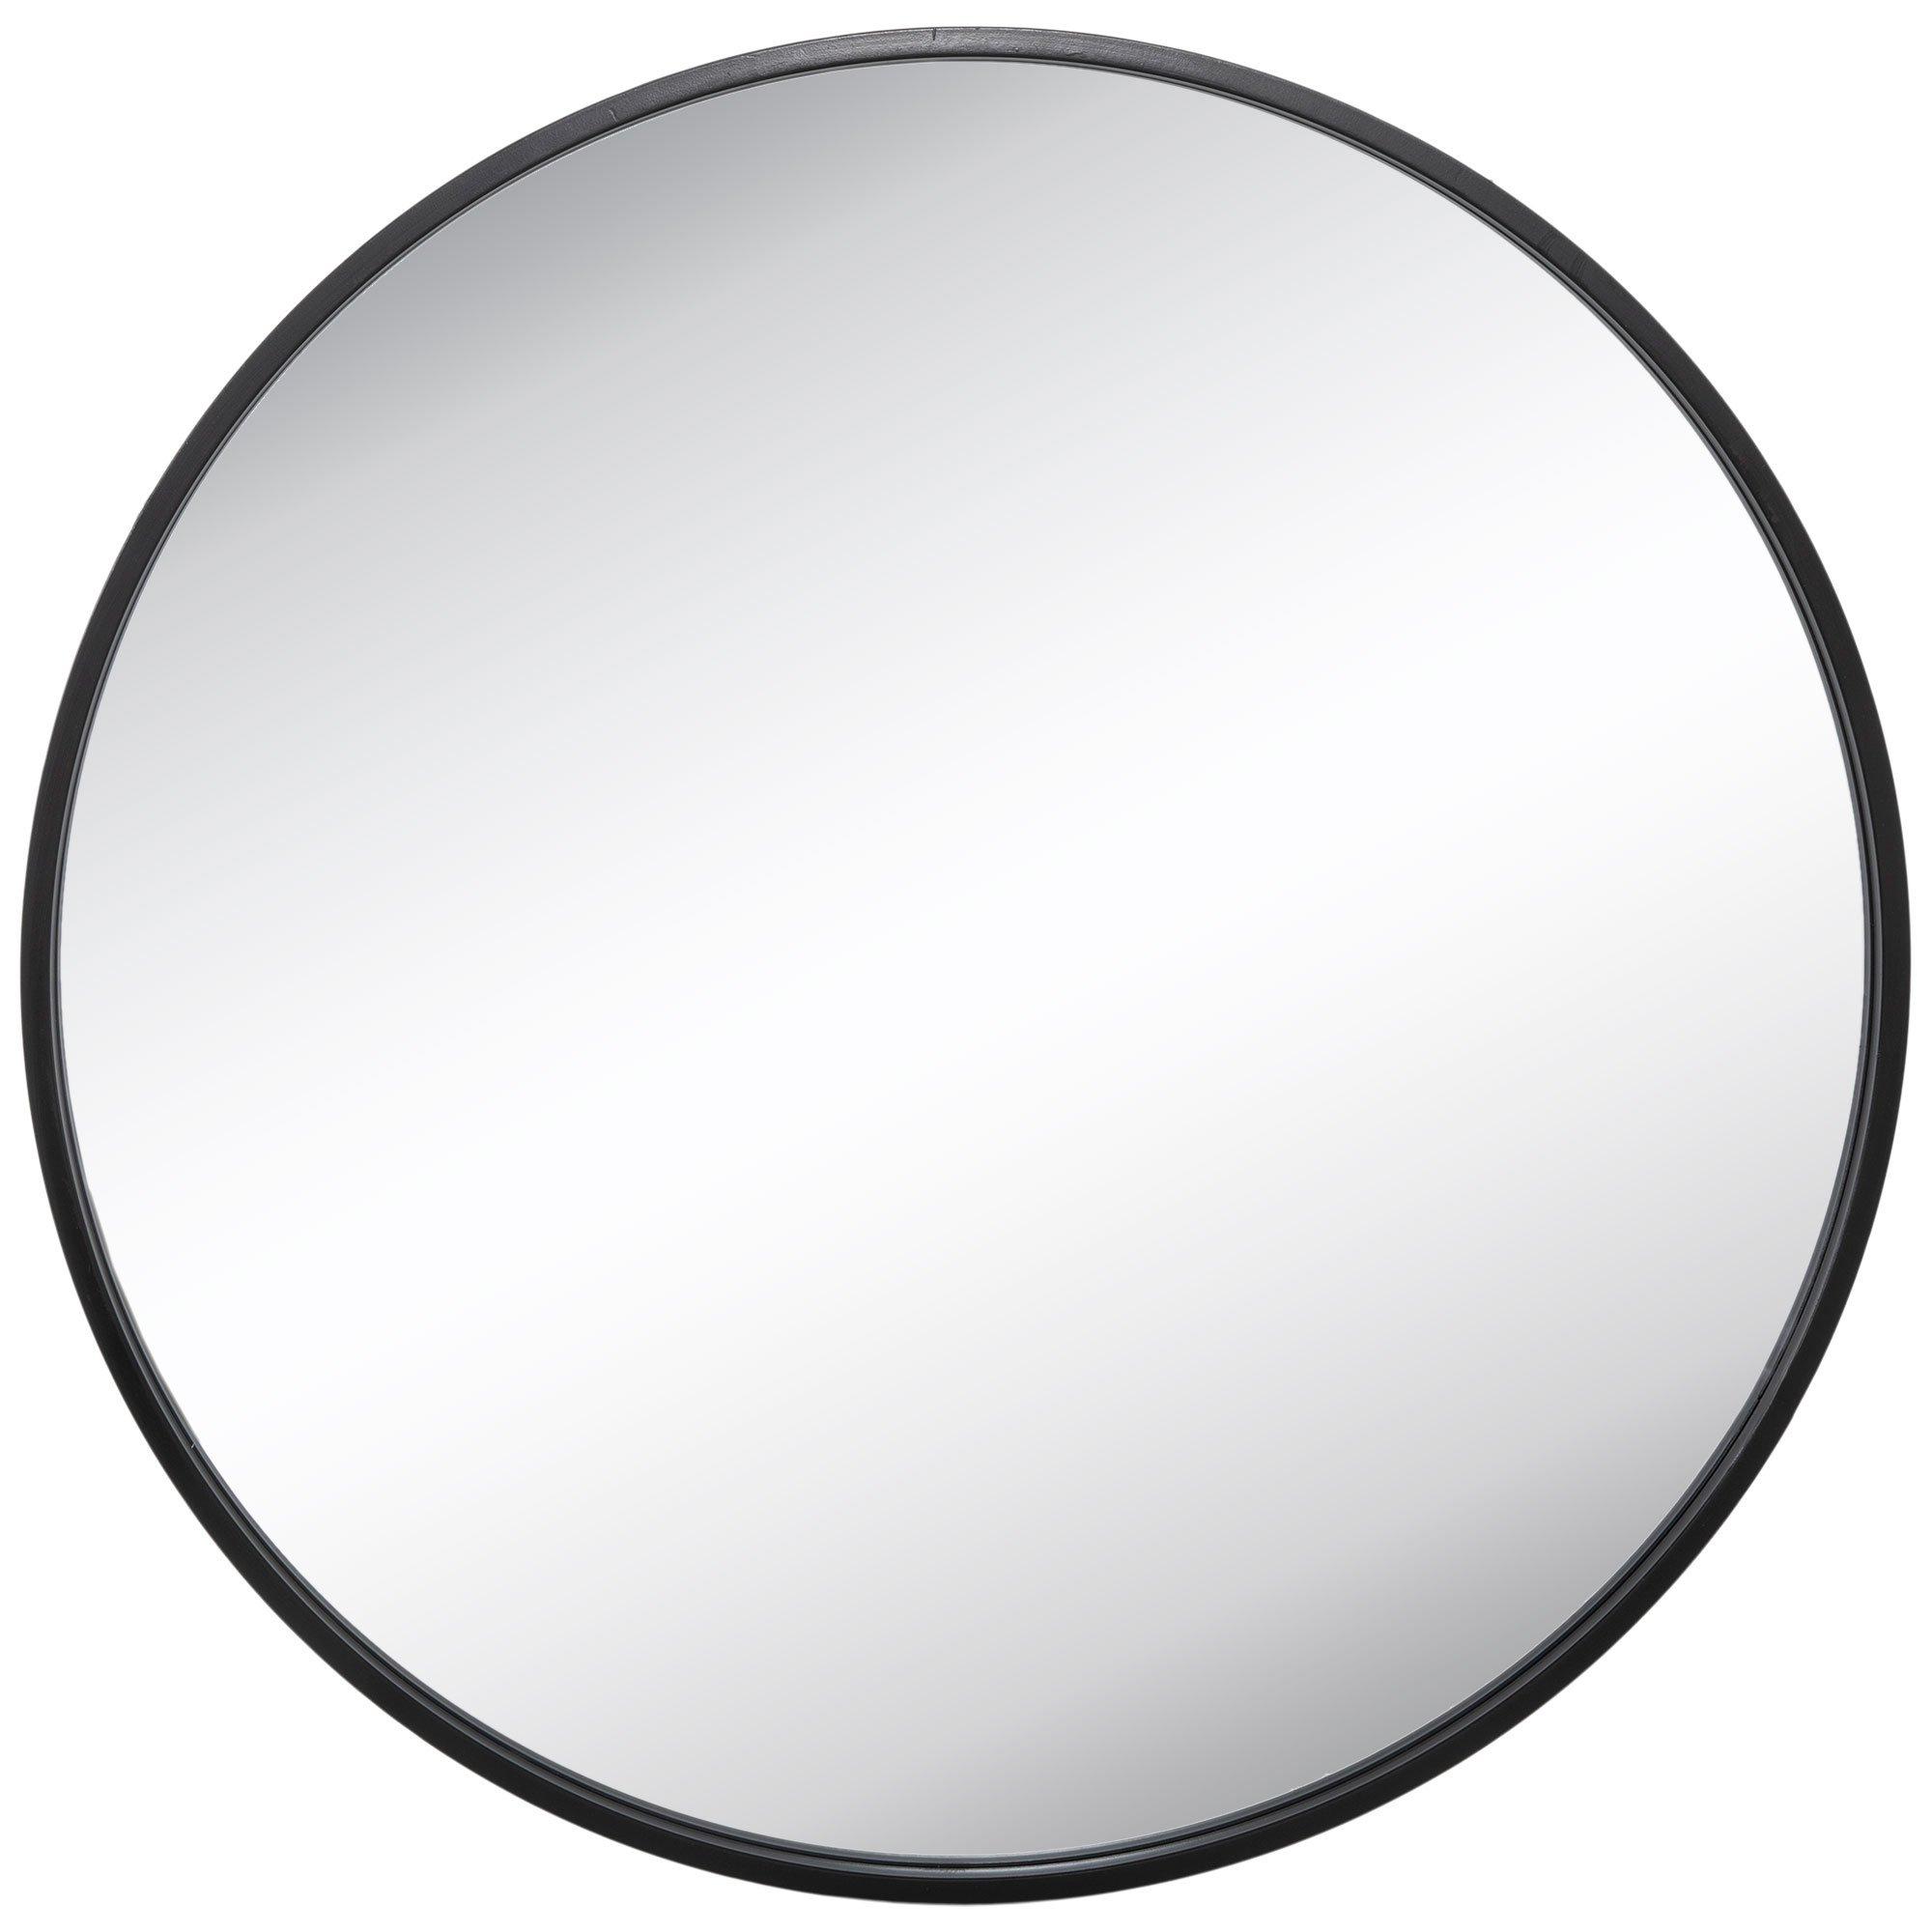 24 Round MIRRORS 1/2 Inch Diameter Circle Shape Circular Real